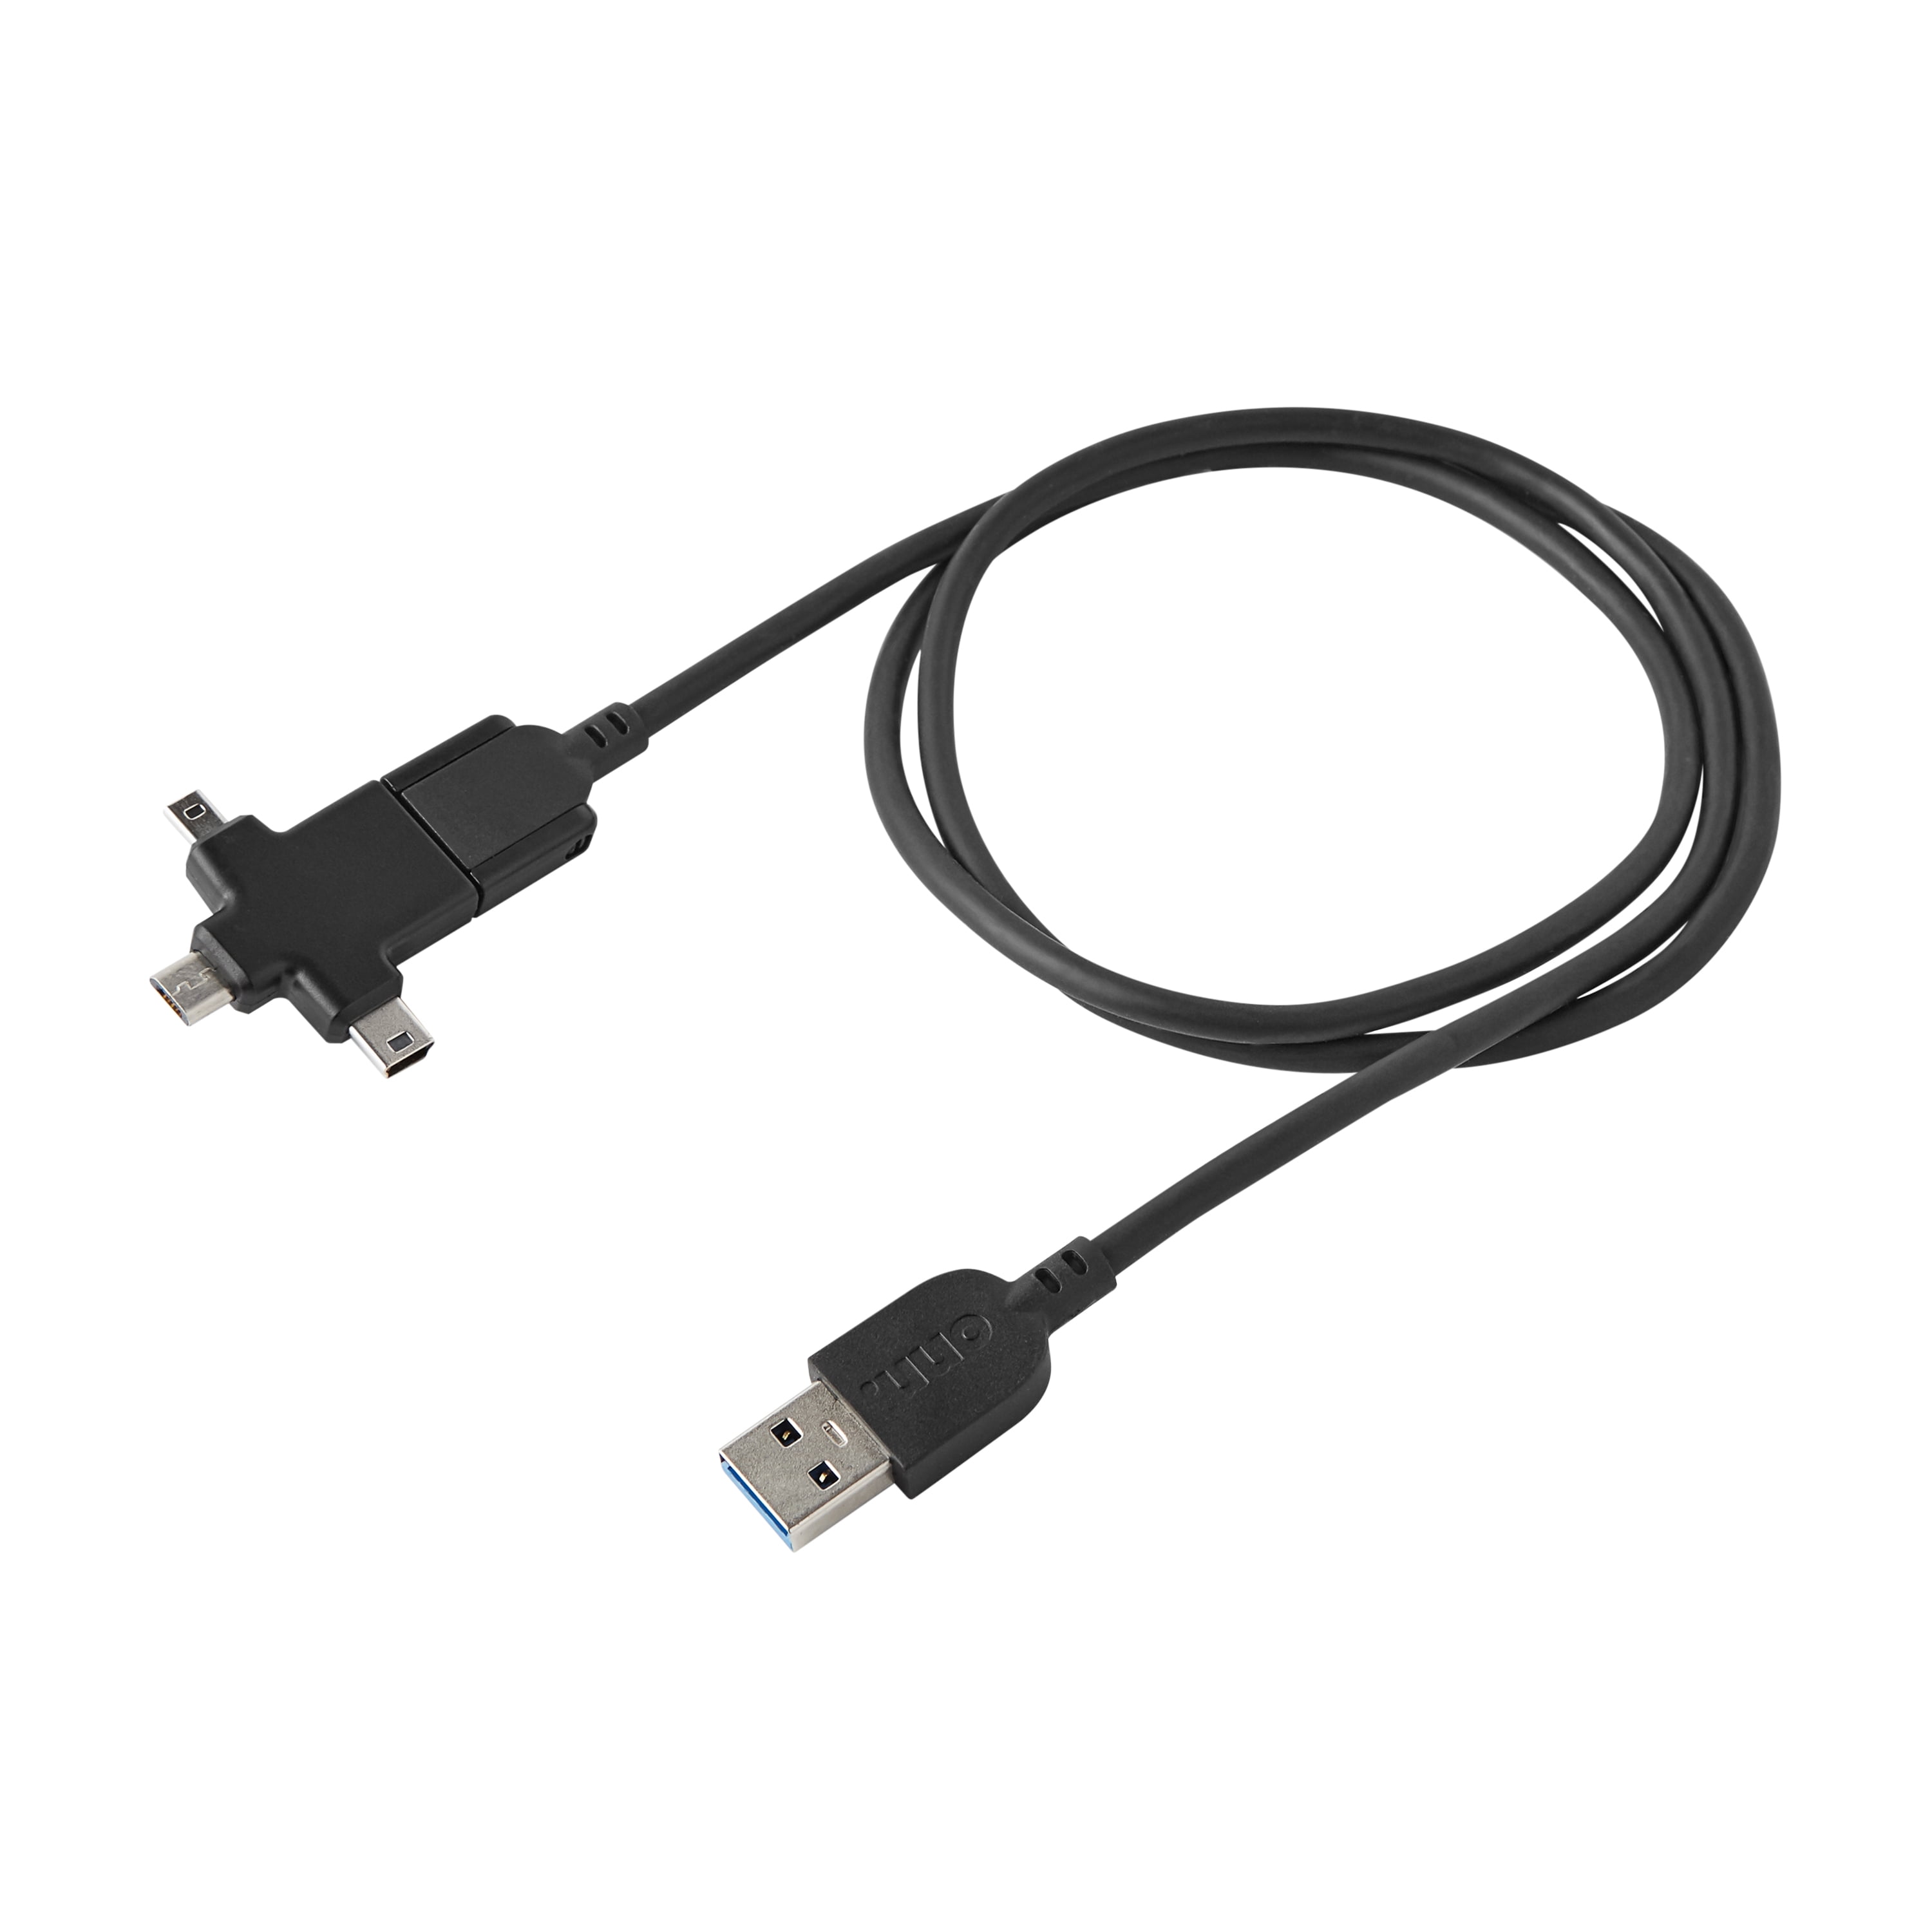 USB Universal Multi-Connector Cable with USB-C, Micro-USB, Mini-USB Mini-B Connectors, 3' - Walmart.com